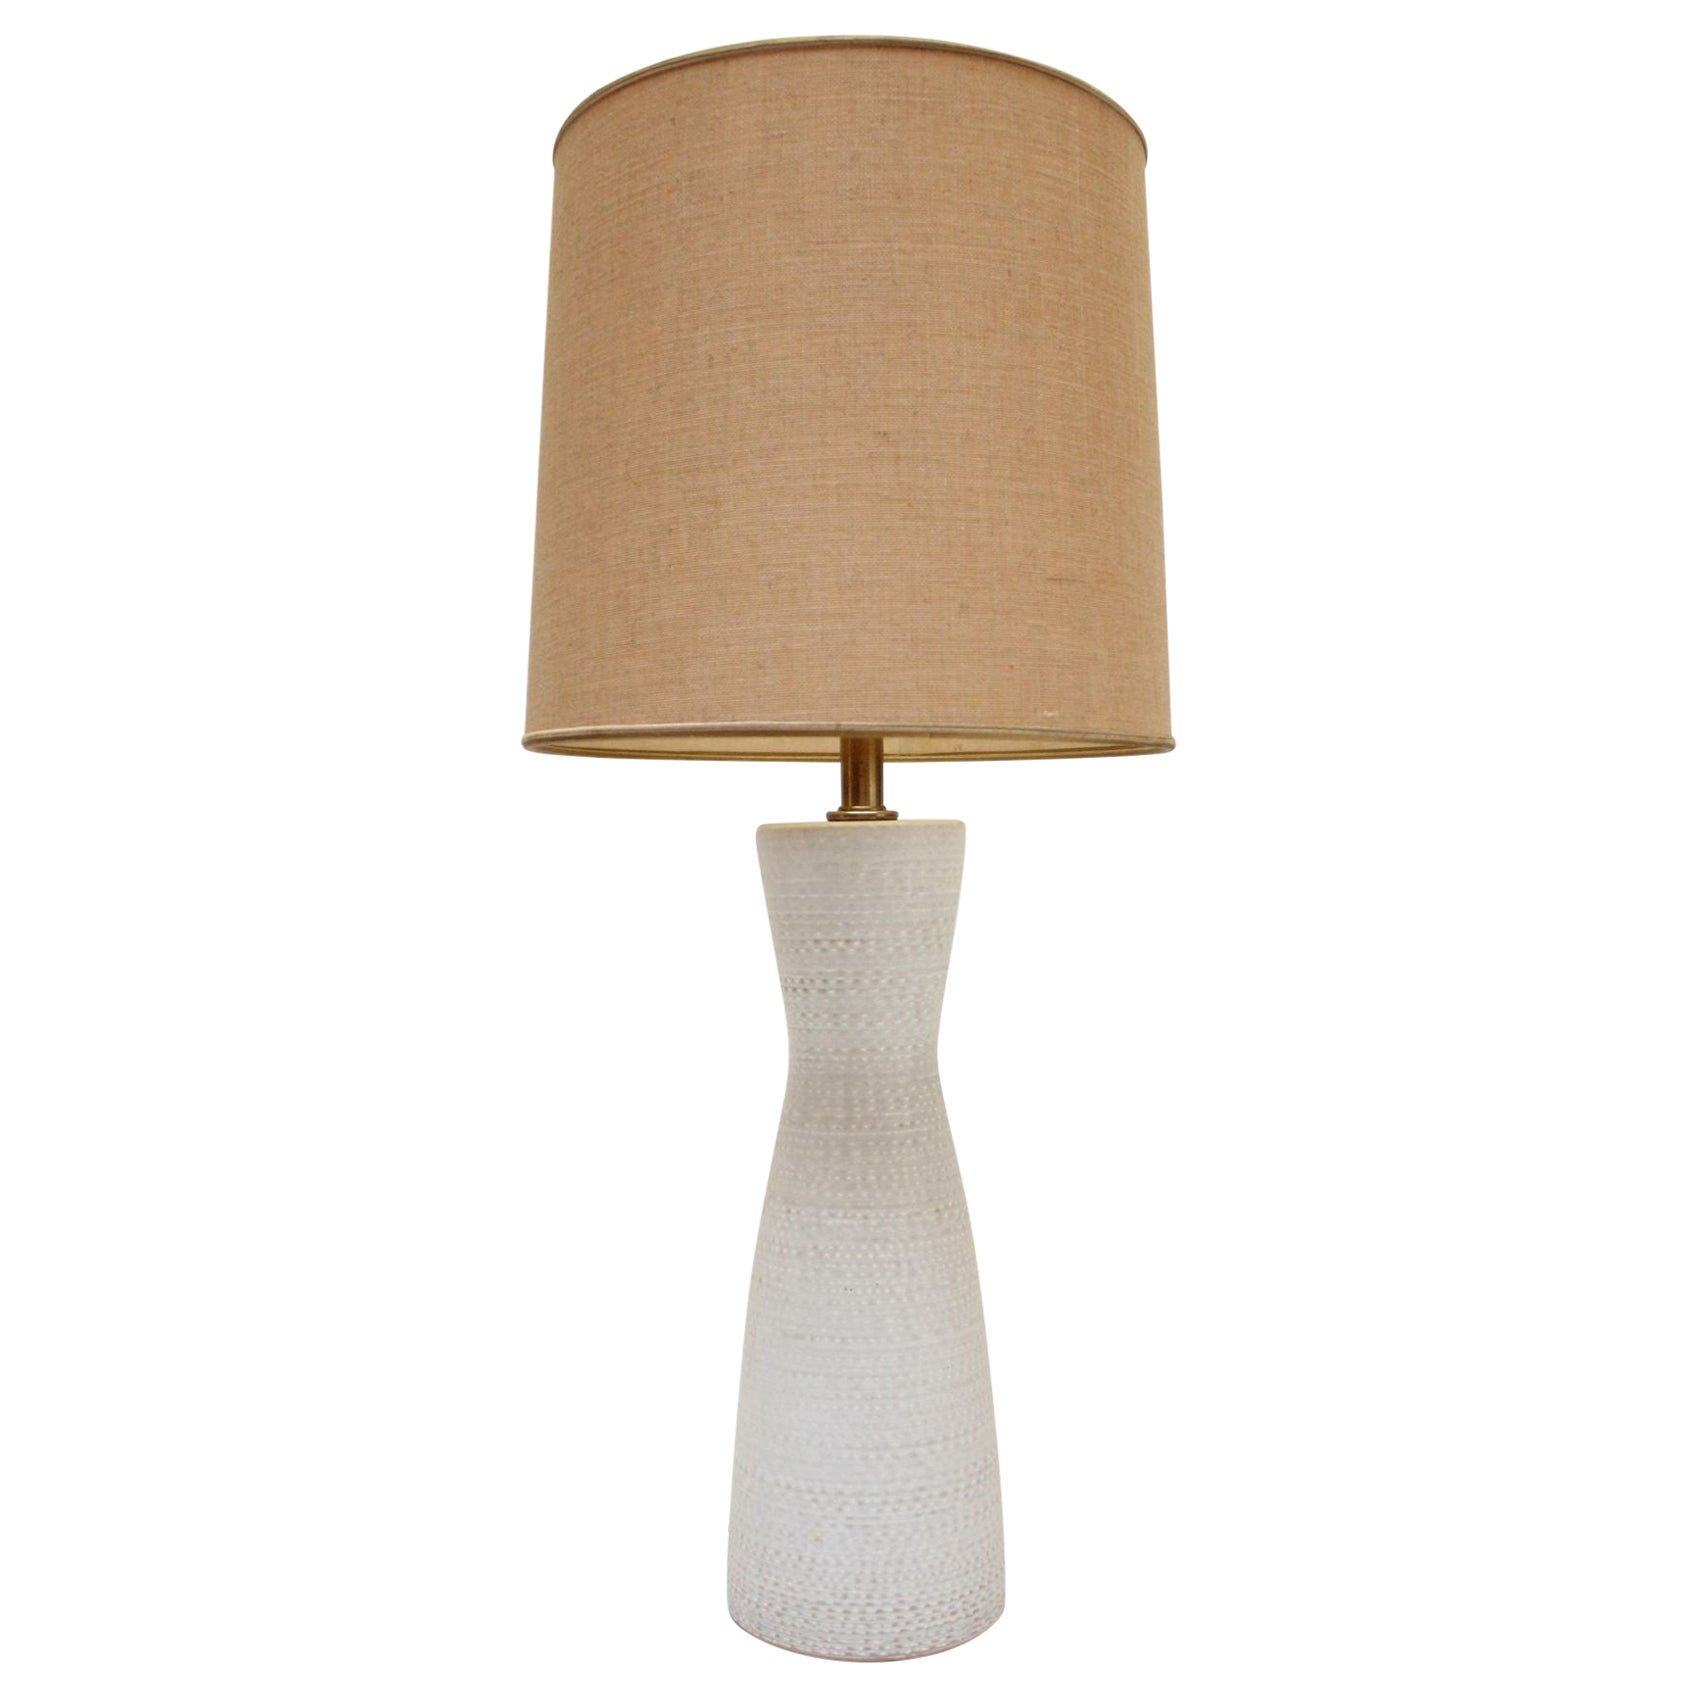 Vintage Textured Ceramic Table Lamp by Lee Rosen for Design Technics